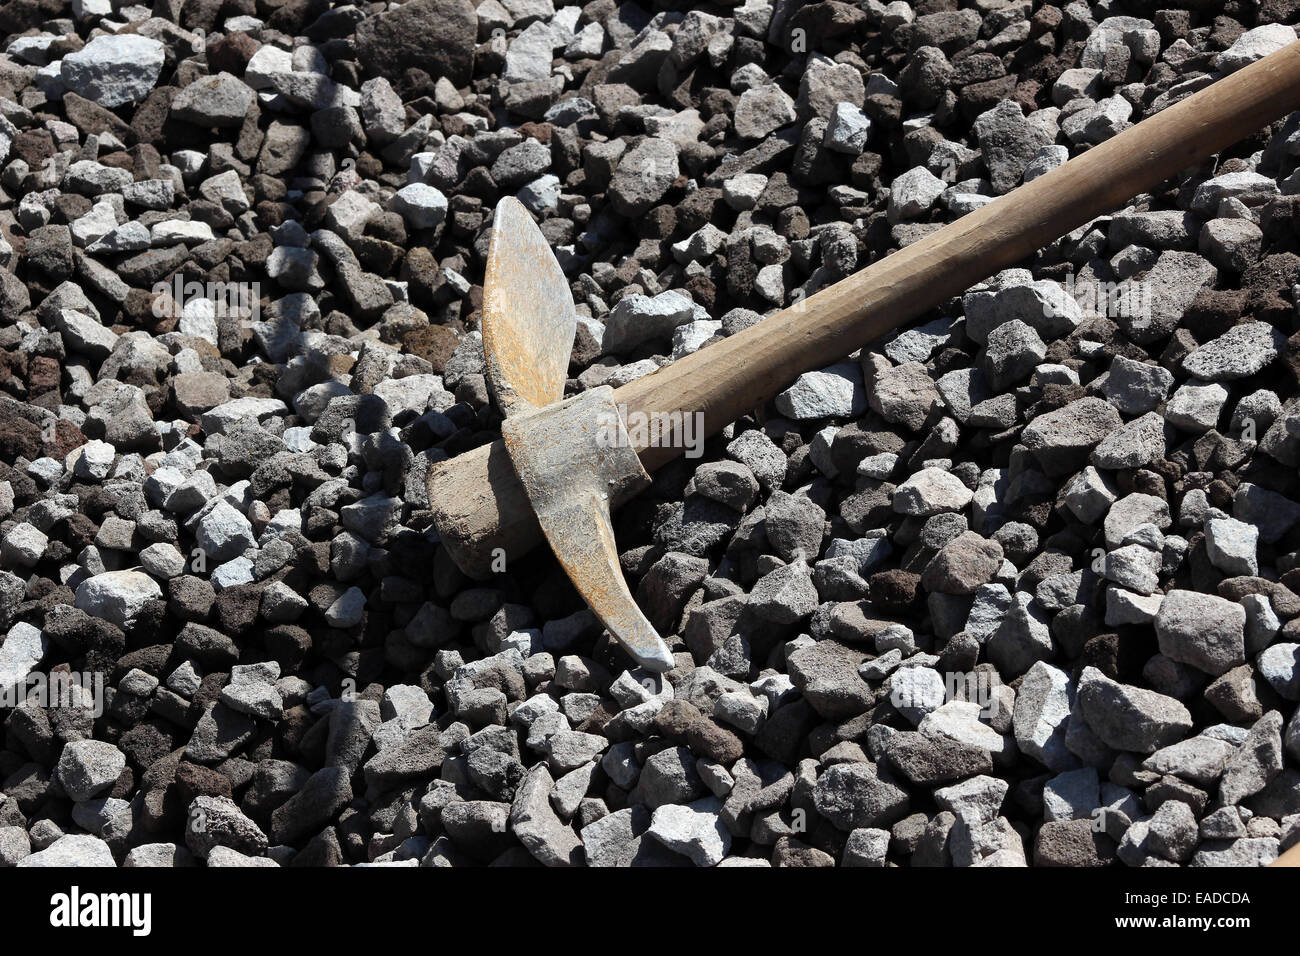 A pick axe lying on a pile of rocks at a construction site in Cotacachi, Ecuador Stock Photo